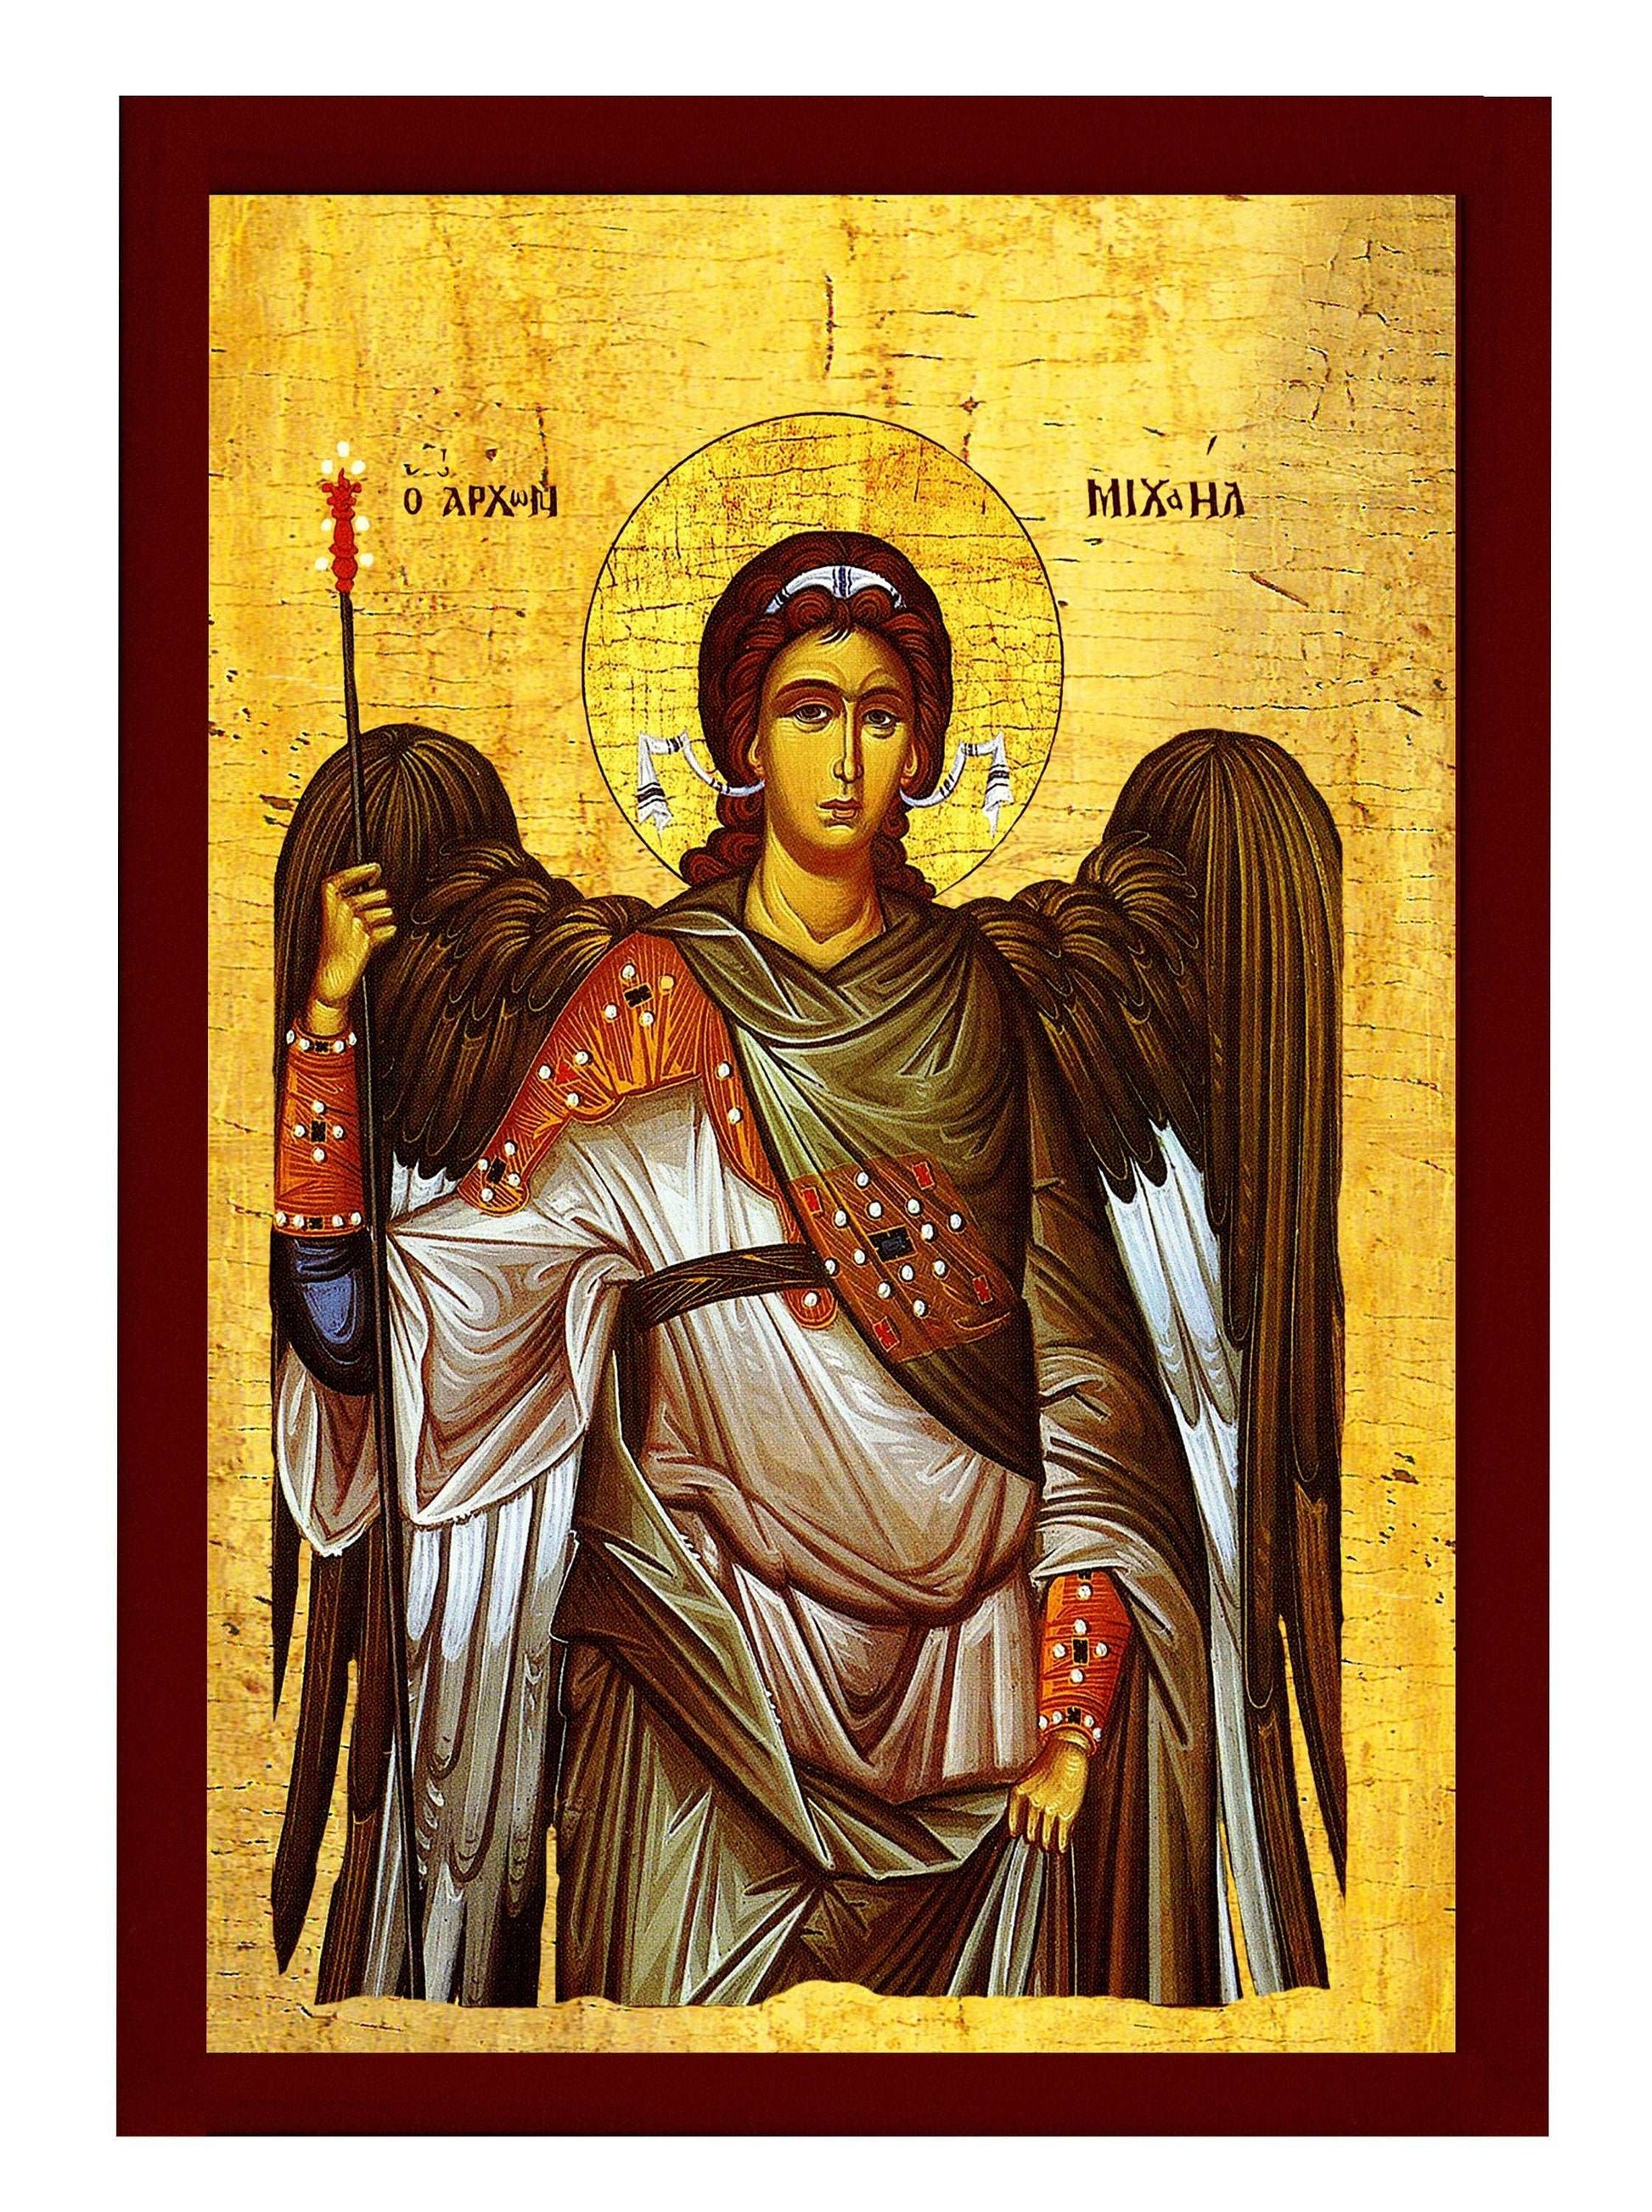 Archangel Michael icon, Handmade Greek Orthodox icon of St Michael, Byzantine art wall hanging on wood plaque religious icon, religious gift decor TheHolyArt